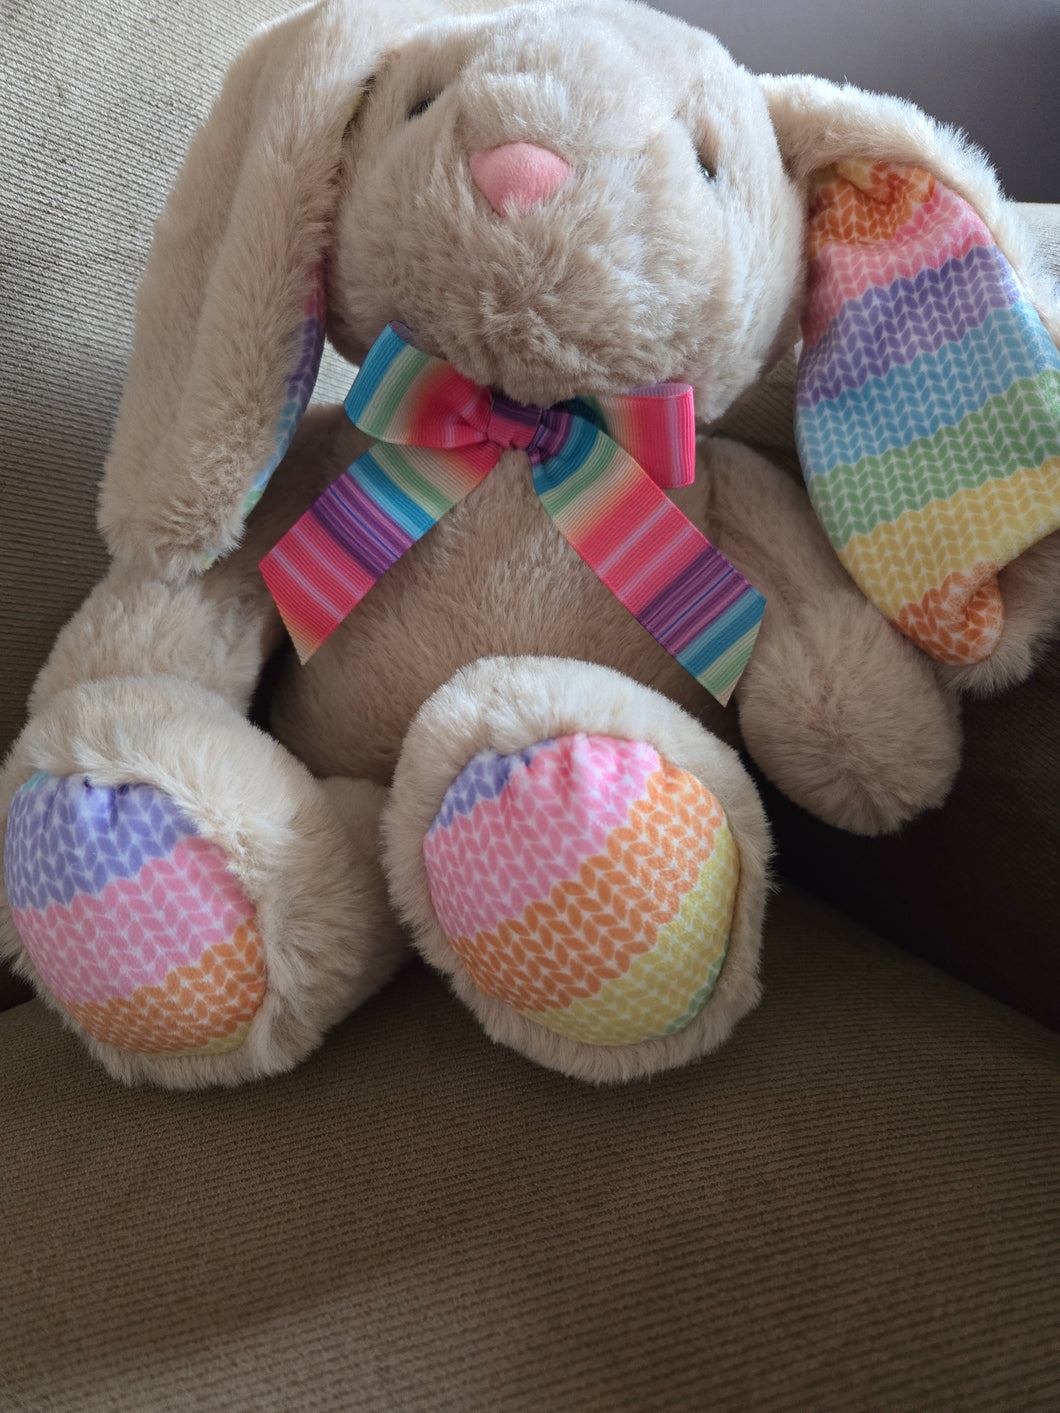 Bunny Stuffed Animal - Easter Bunny Toy - Tan colored bunny